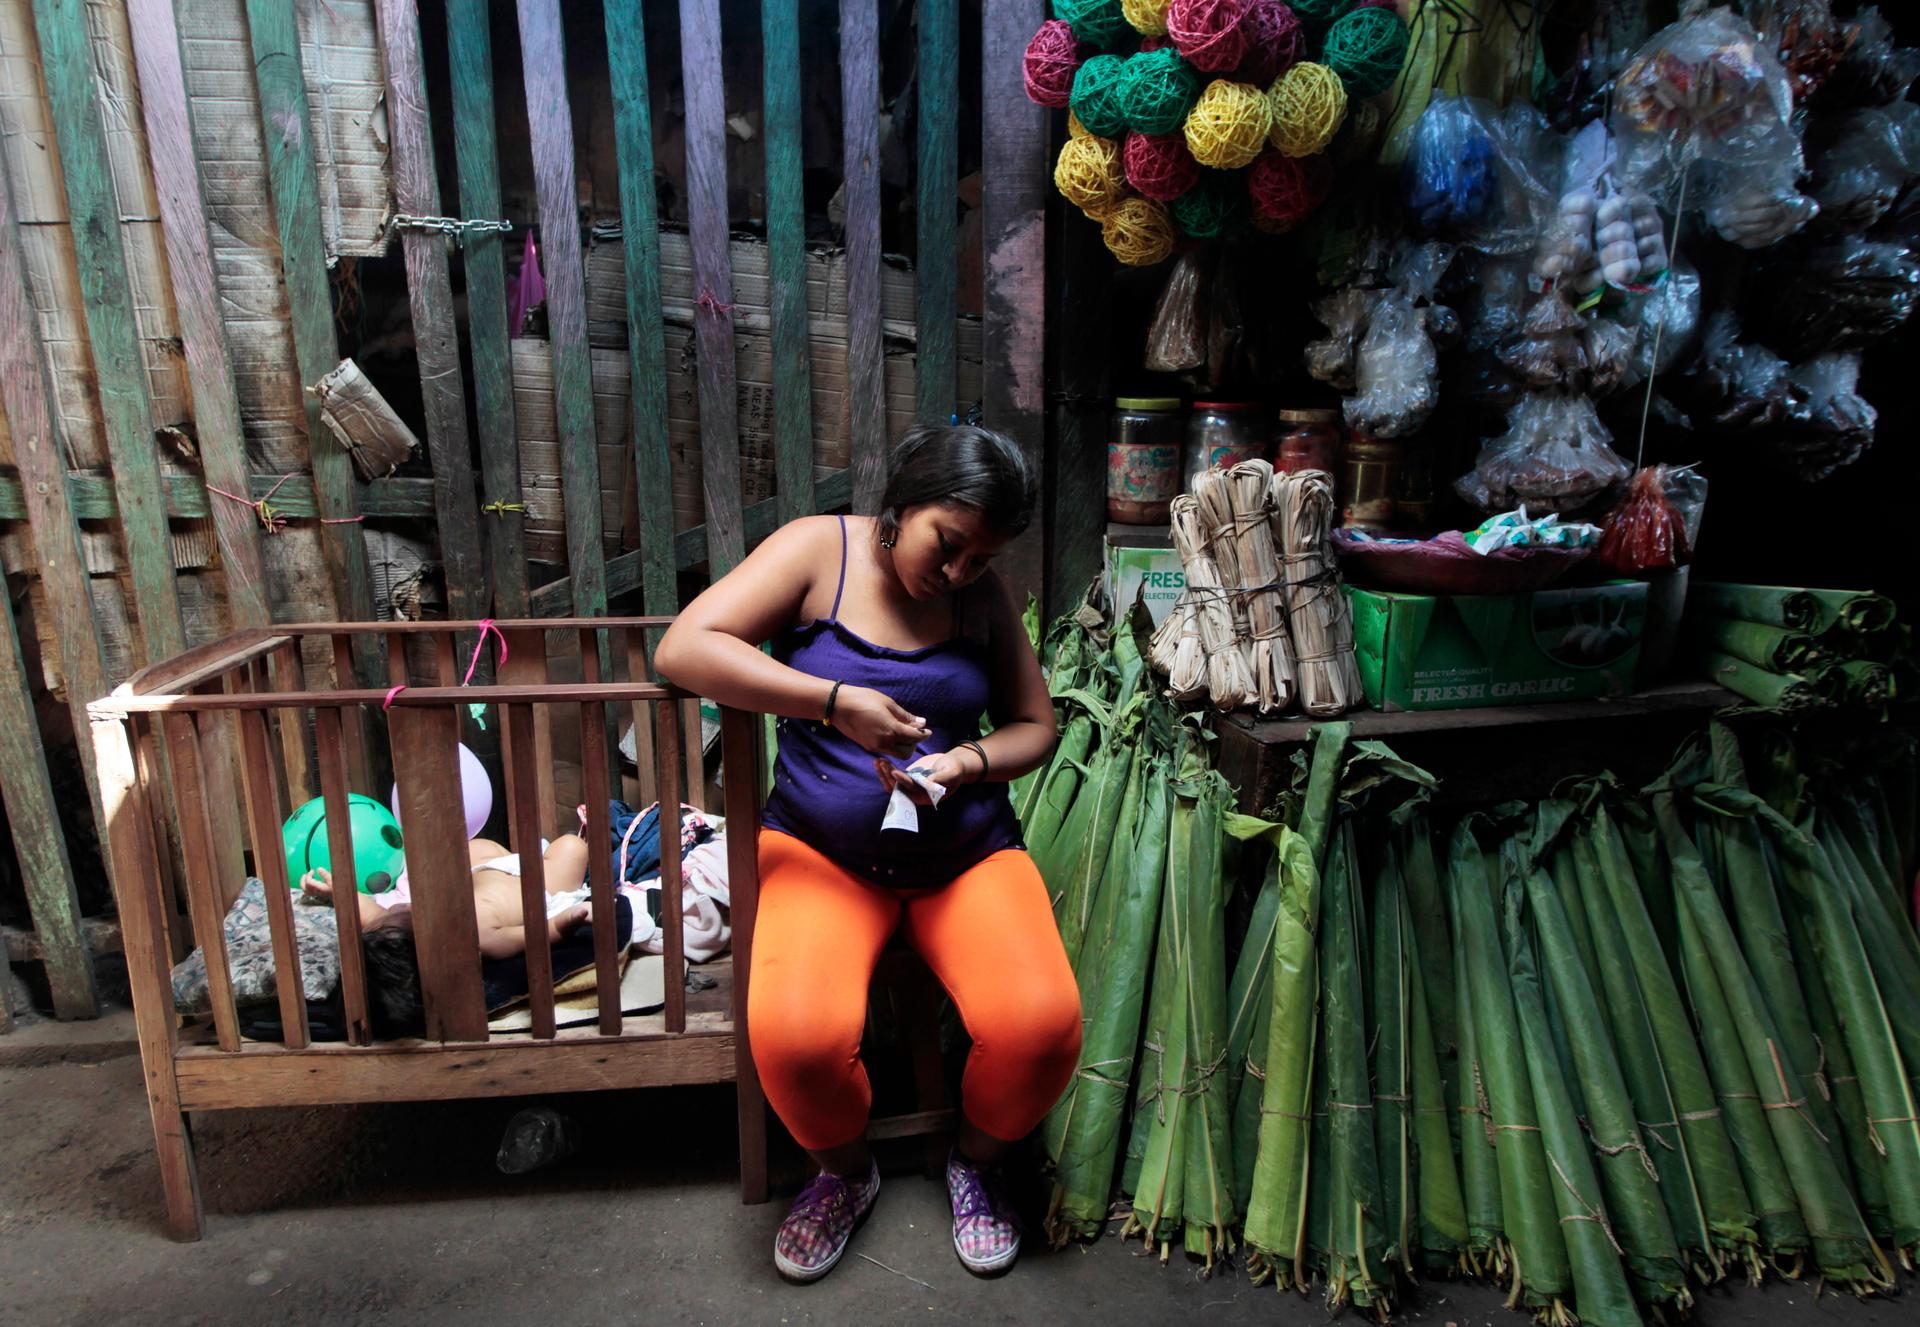 A woman sells banana leaves at a market in Managua, Nicaragua.